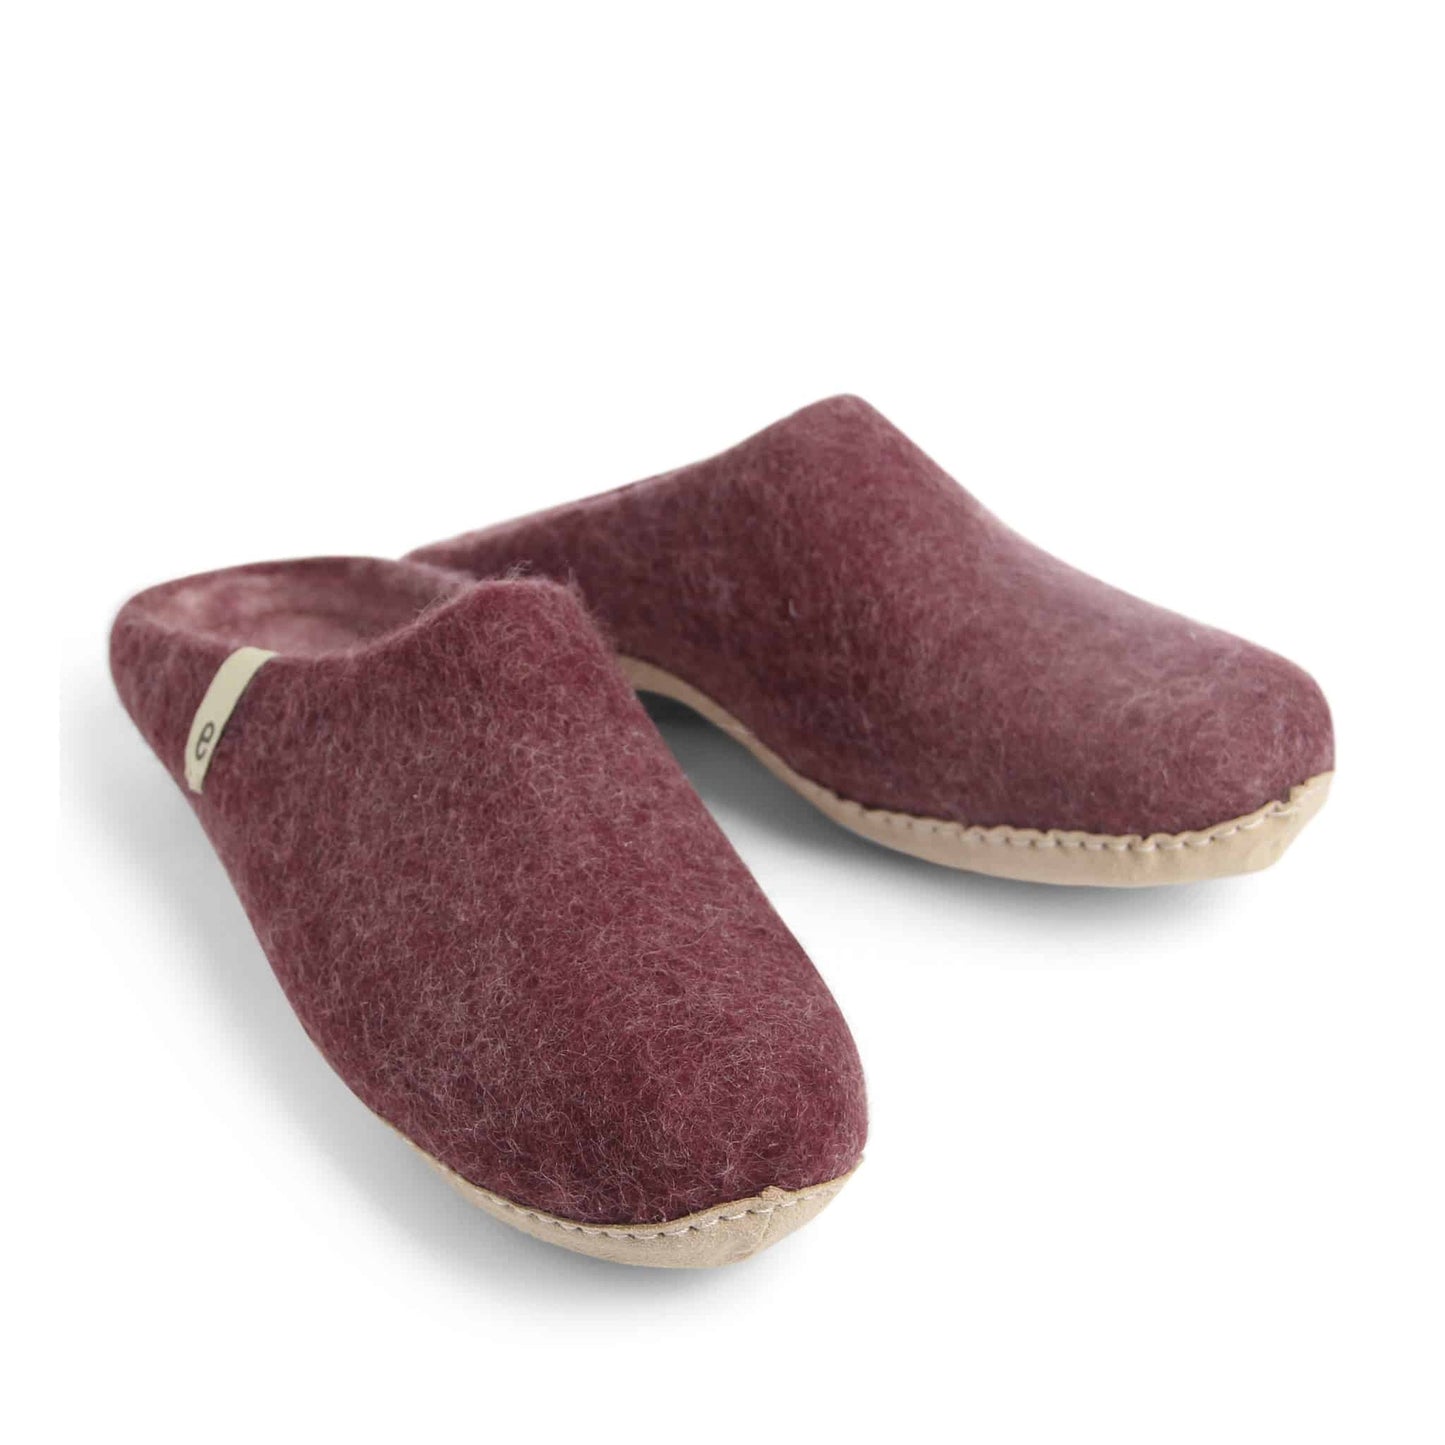 Egos Shoes Merino Wool Slipper Bordeaux